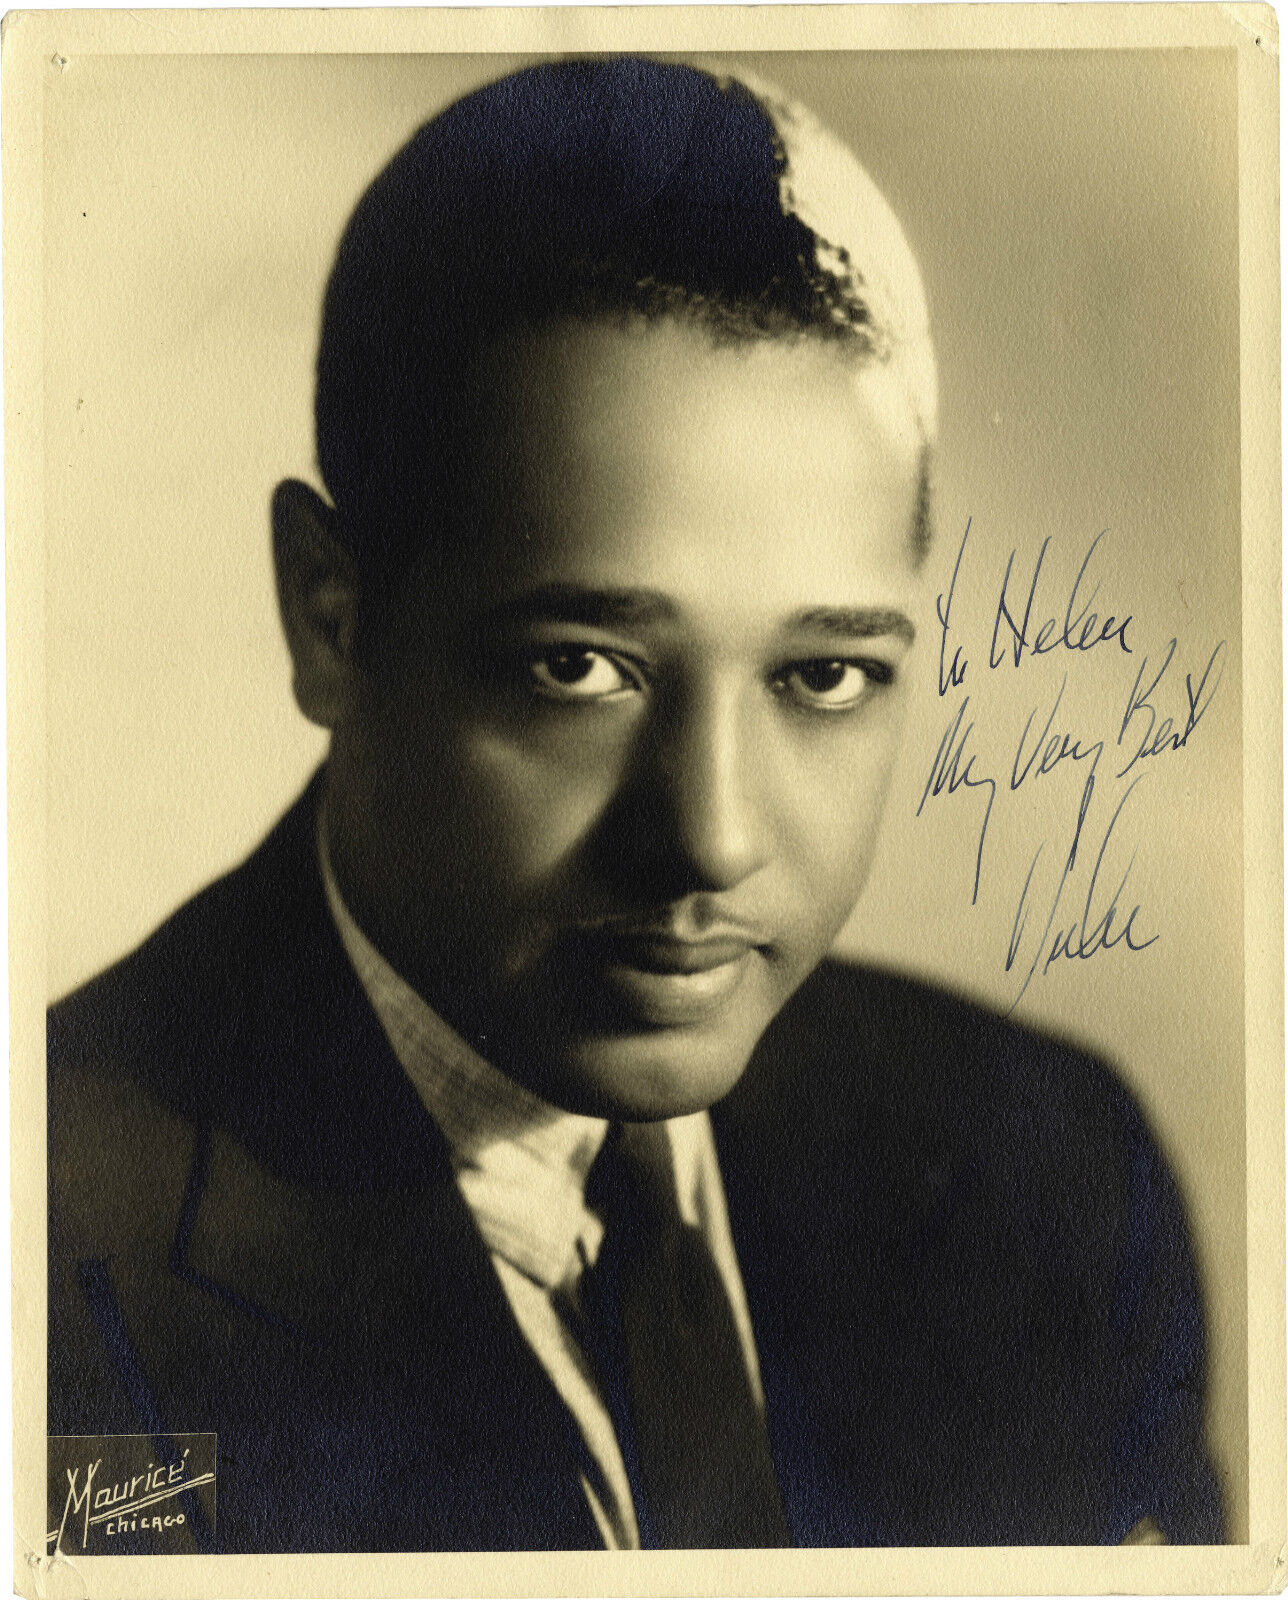 DUKE ELLINGTON Signed Photo Poster paintinggraph - Legendary Jazz Musician & Bandleader preprint